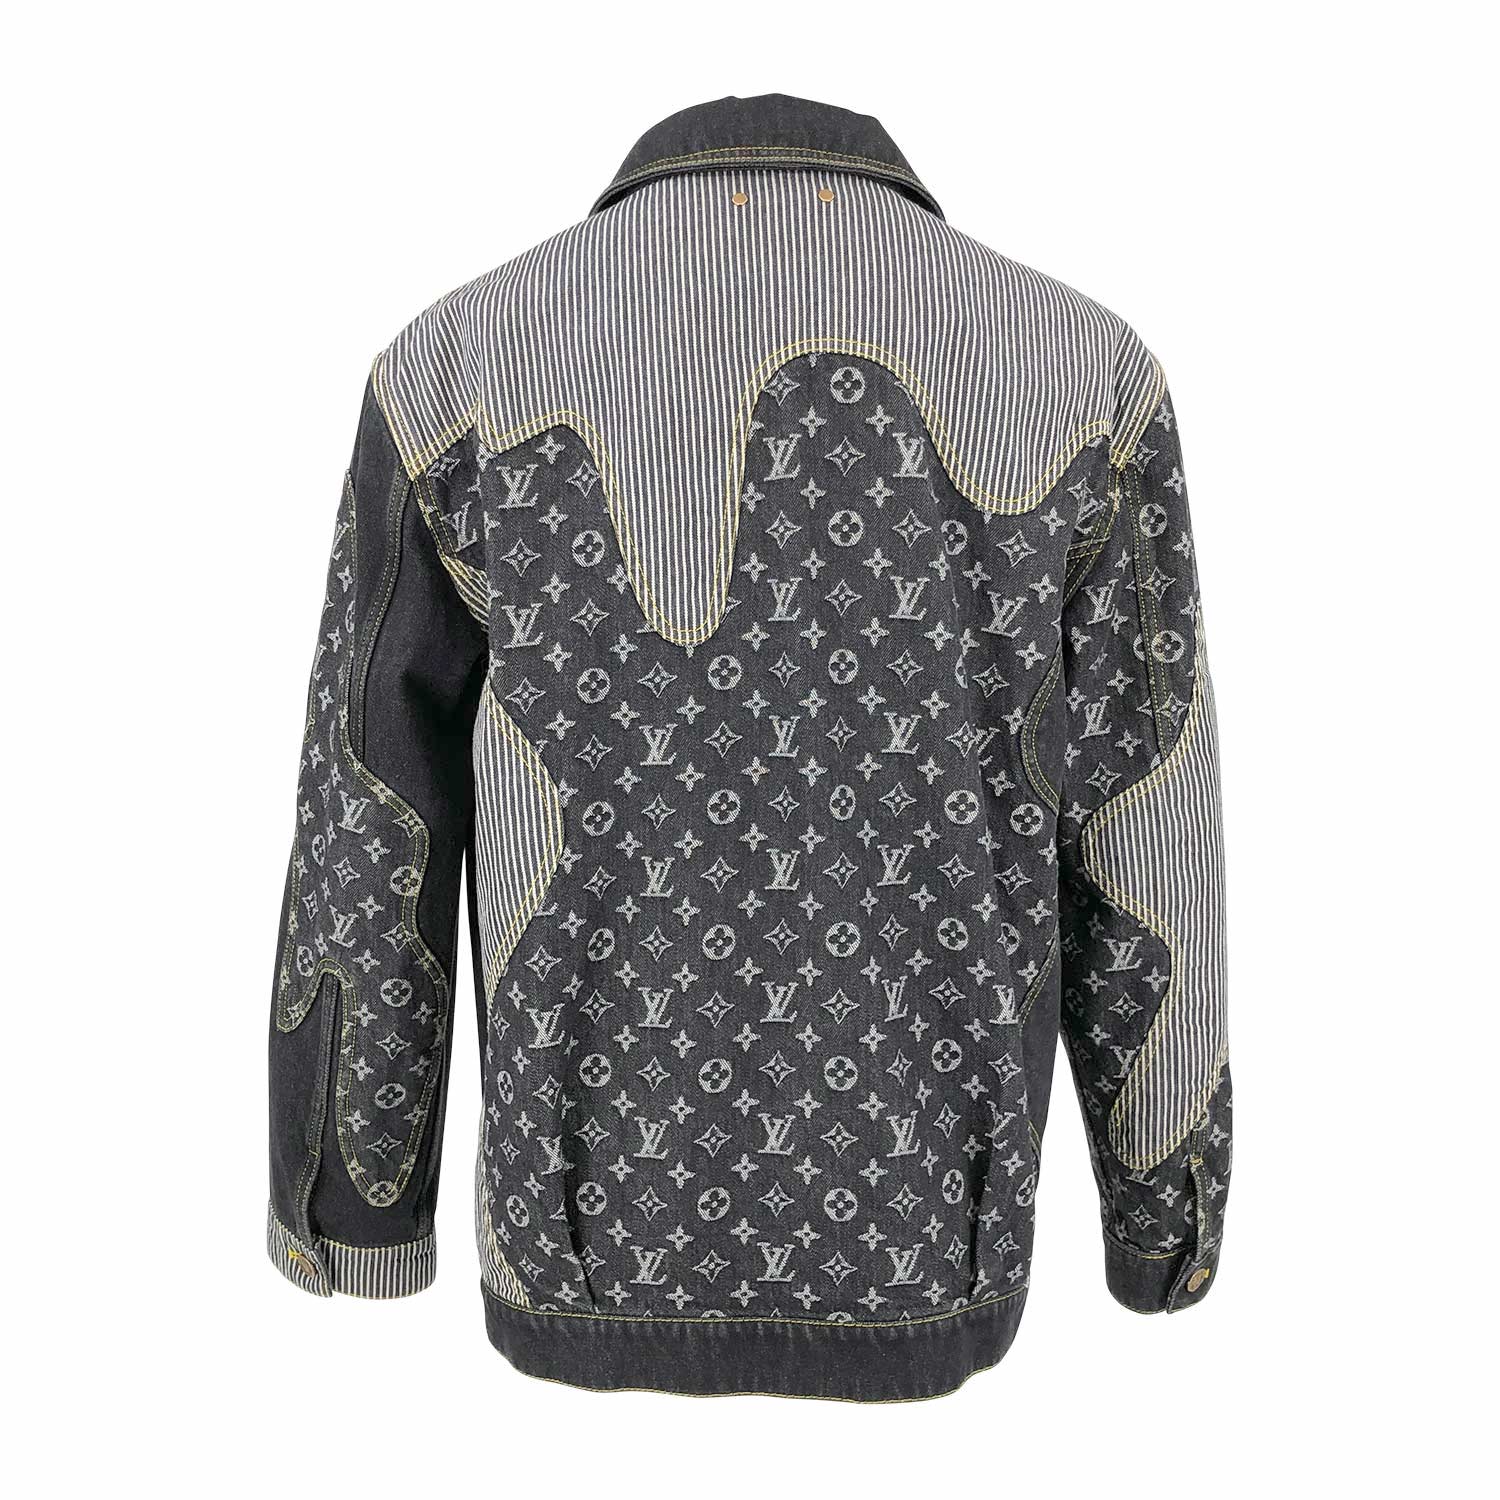 Louis Vuitton Nigo crazy denim jacket in charcoal - DOWNTOWN UPTOWN Genève